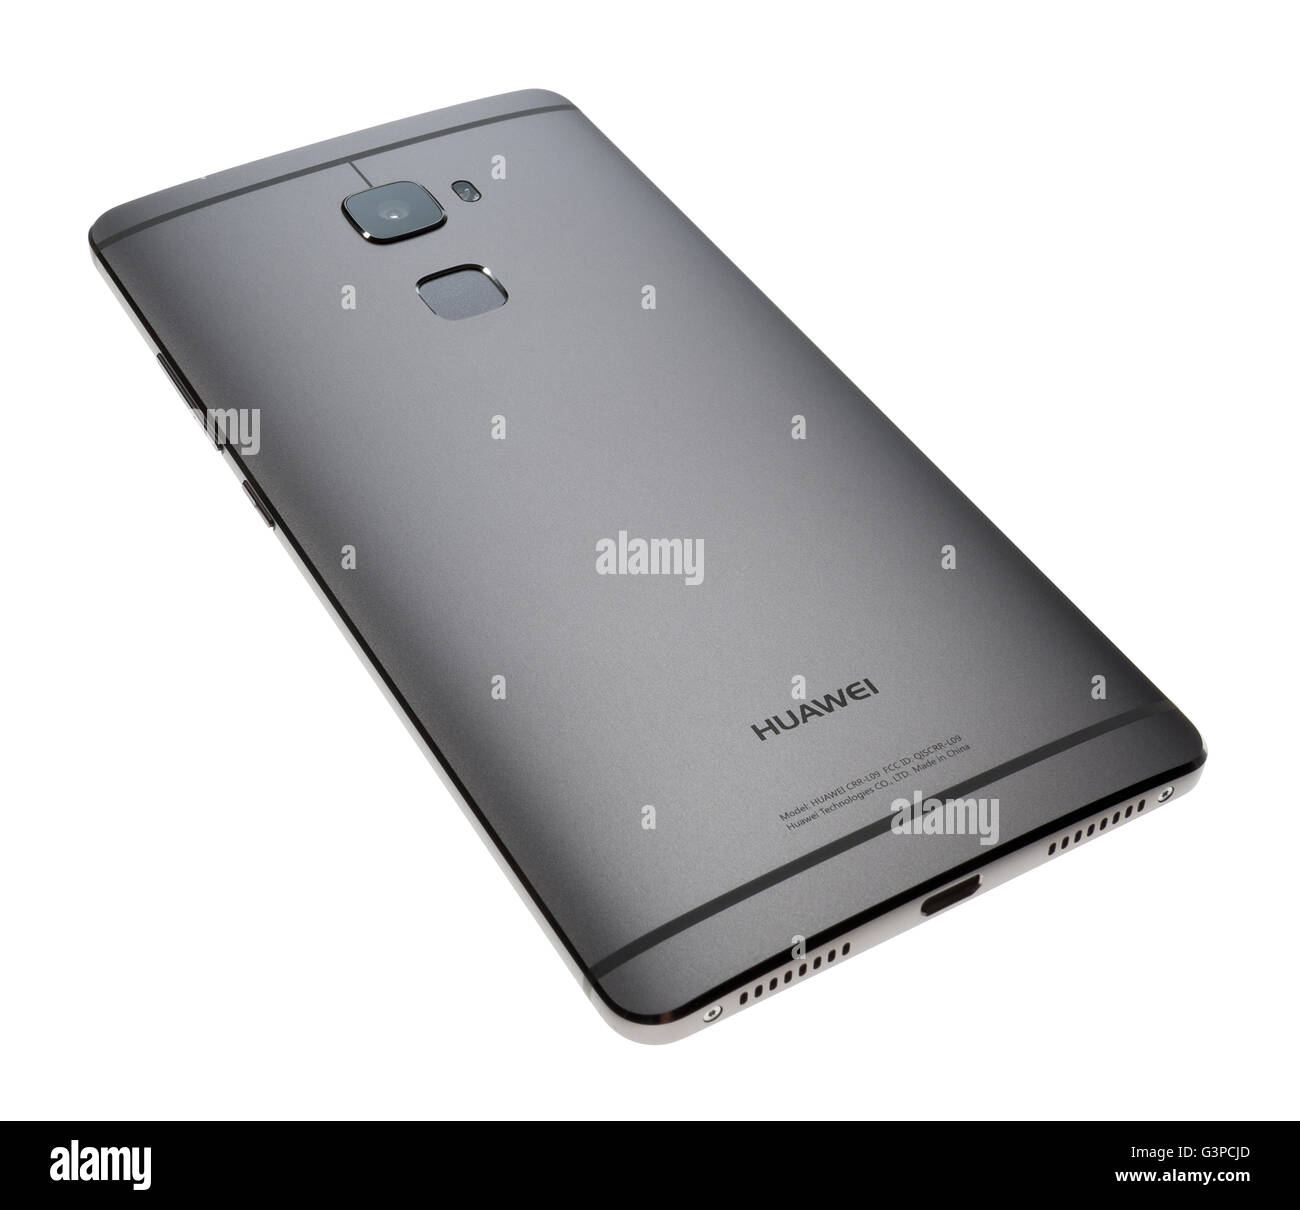 Huawei Mate S Handy oder Handy. Rückseite des Geräts zeigen Kamera Objektiv und Fingerprint Scanner. Stockfoto